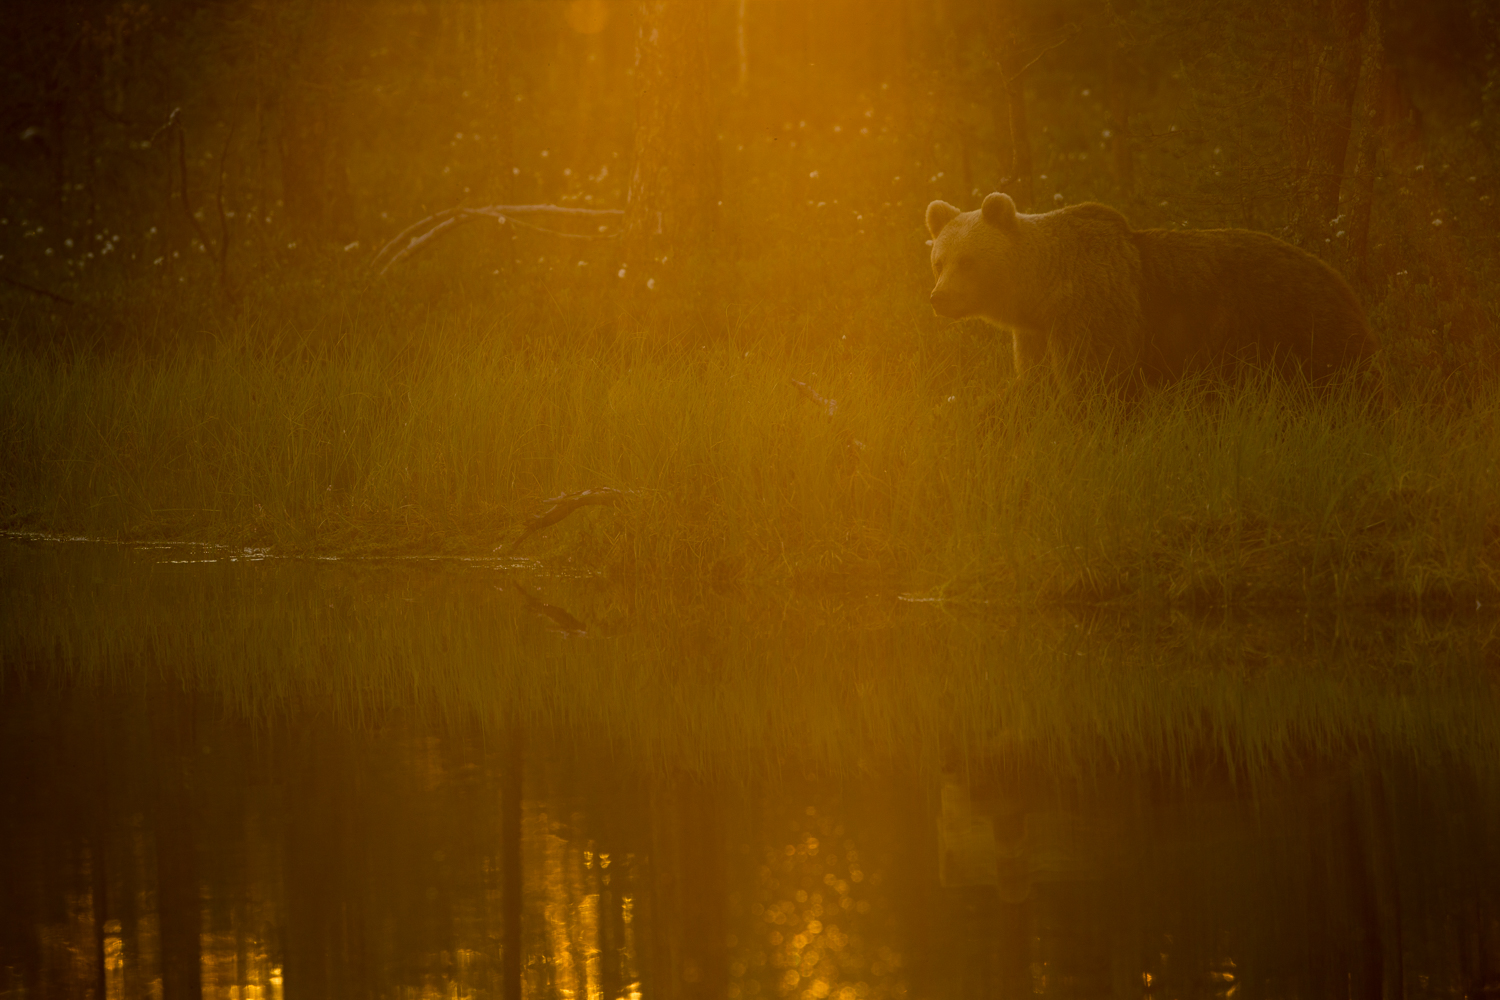 Brown bear photography tour Finland-10.jpg